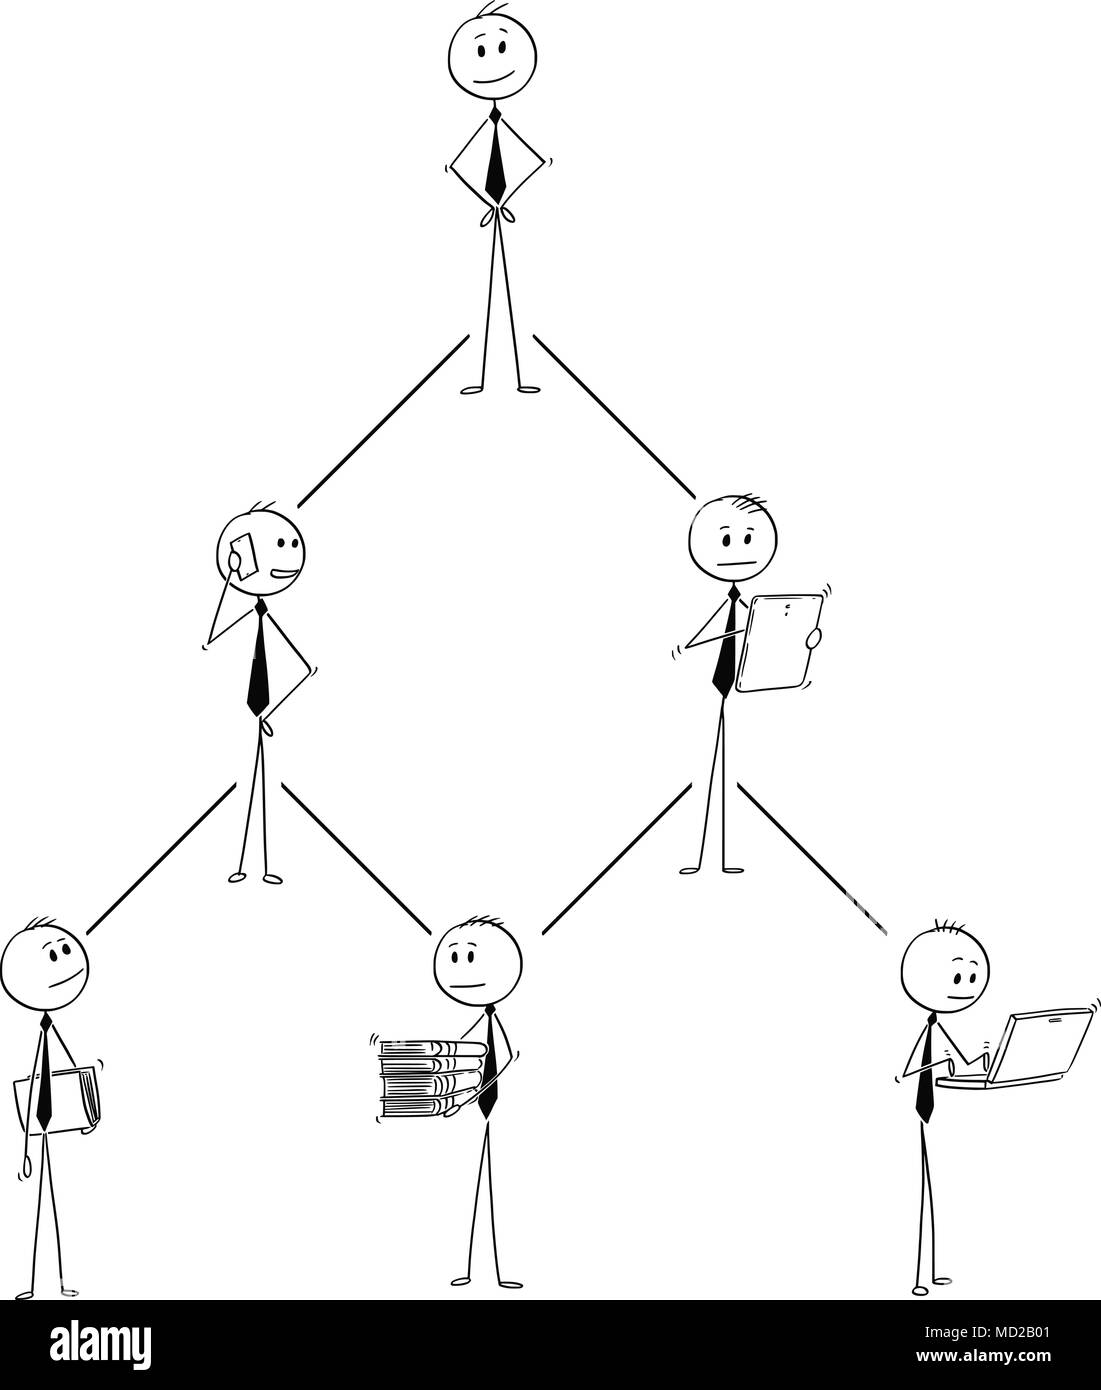 Cartoon of Business Organization Team Hierarchy Scheme Stock Vector